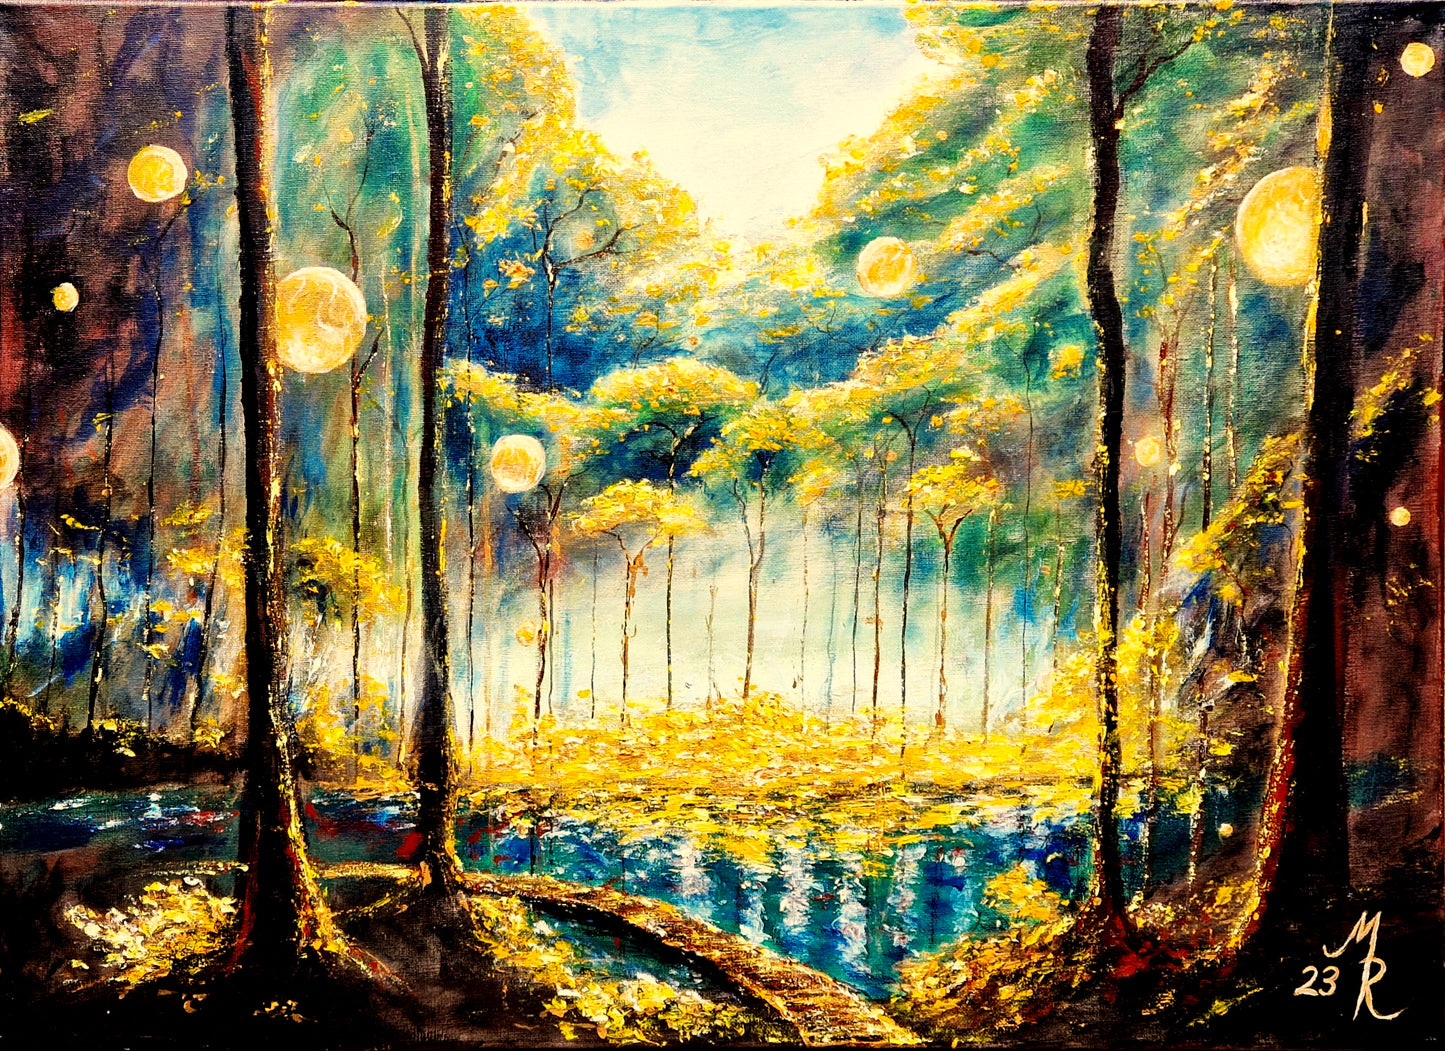 Original acrylic painting " Symphony of Light" - 70x50cm / 28x20 inches